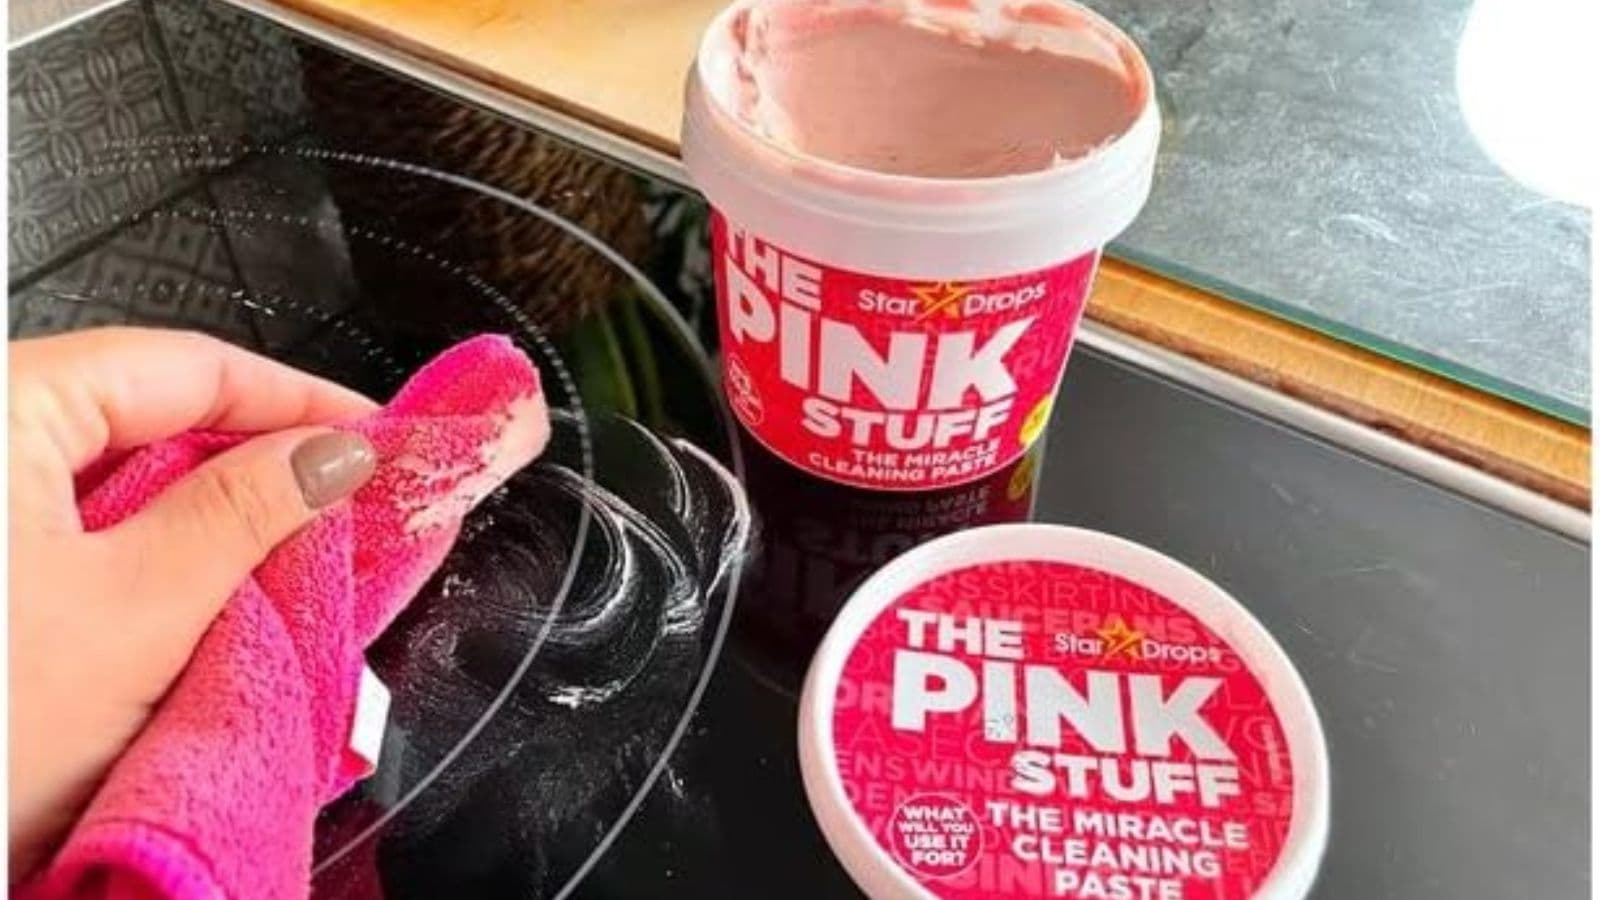 PINK STUFF Pâte nettoyage rose 850g - STAR DROPS